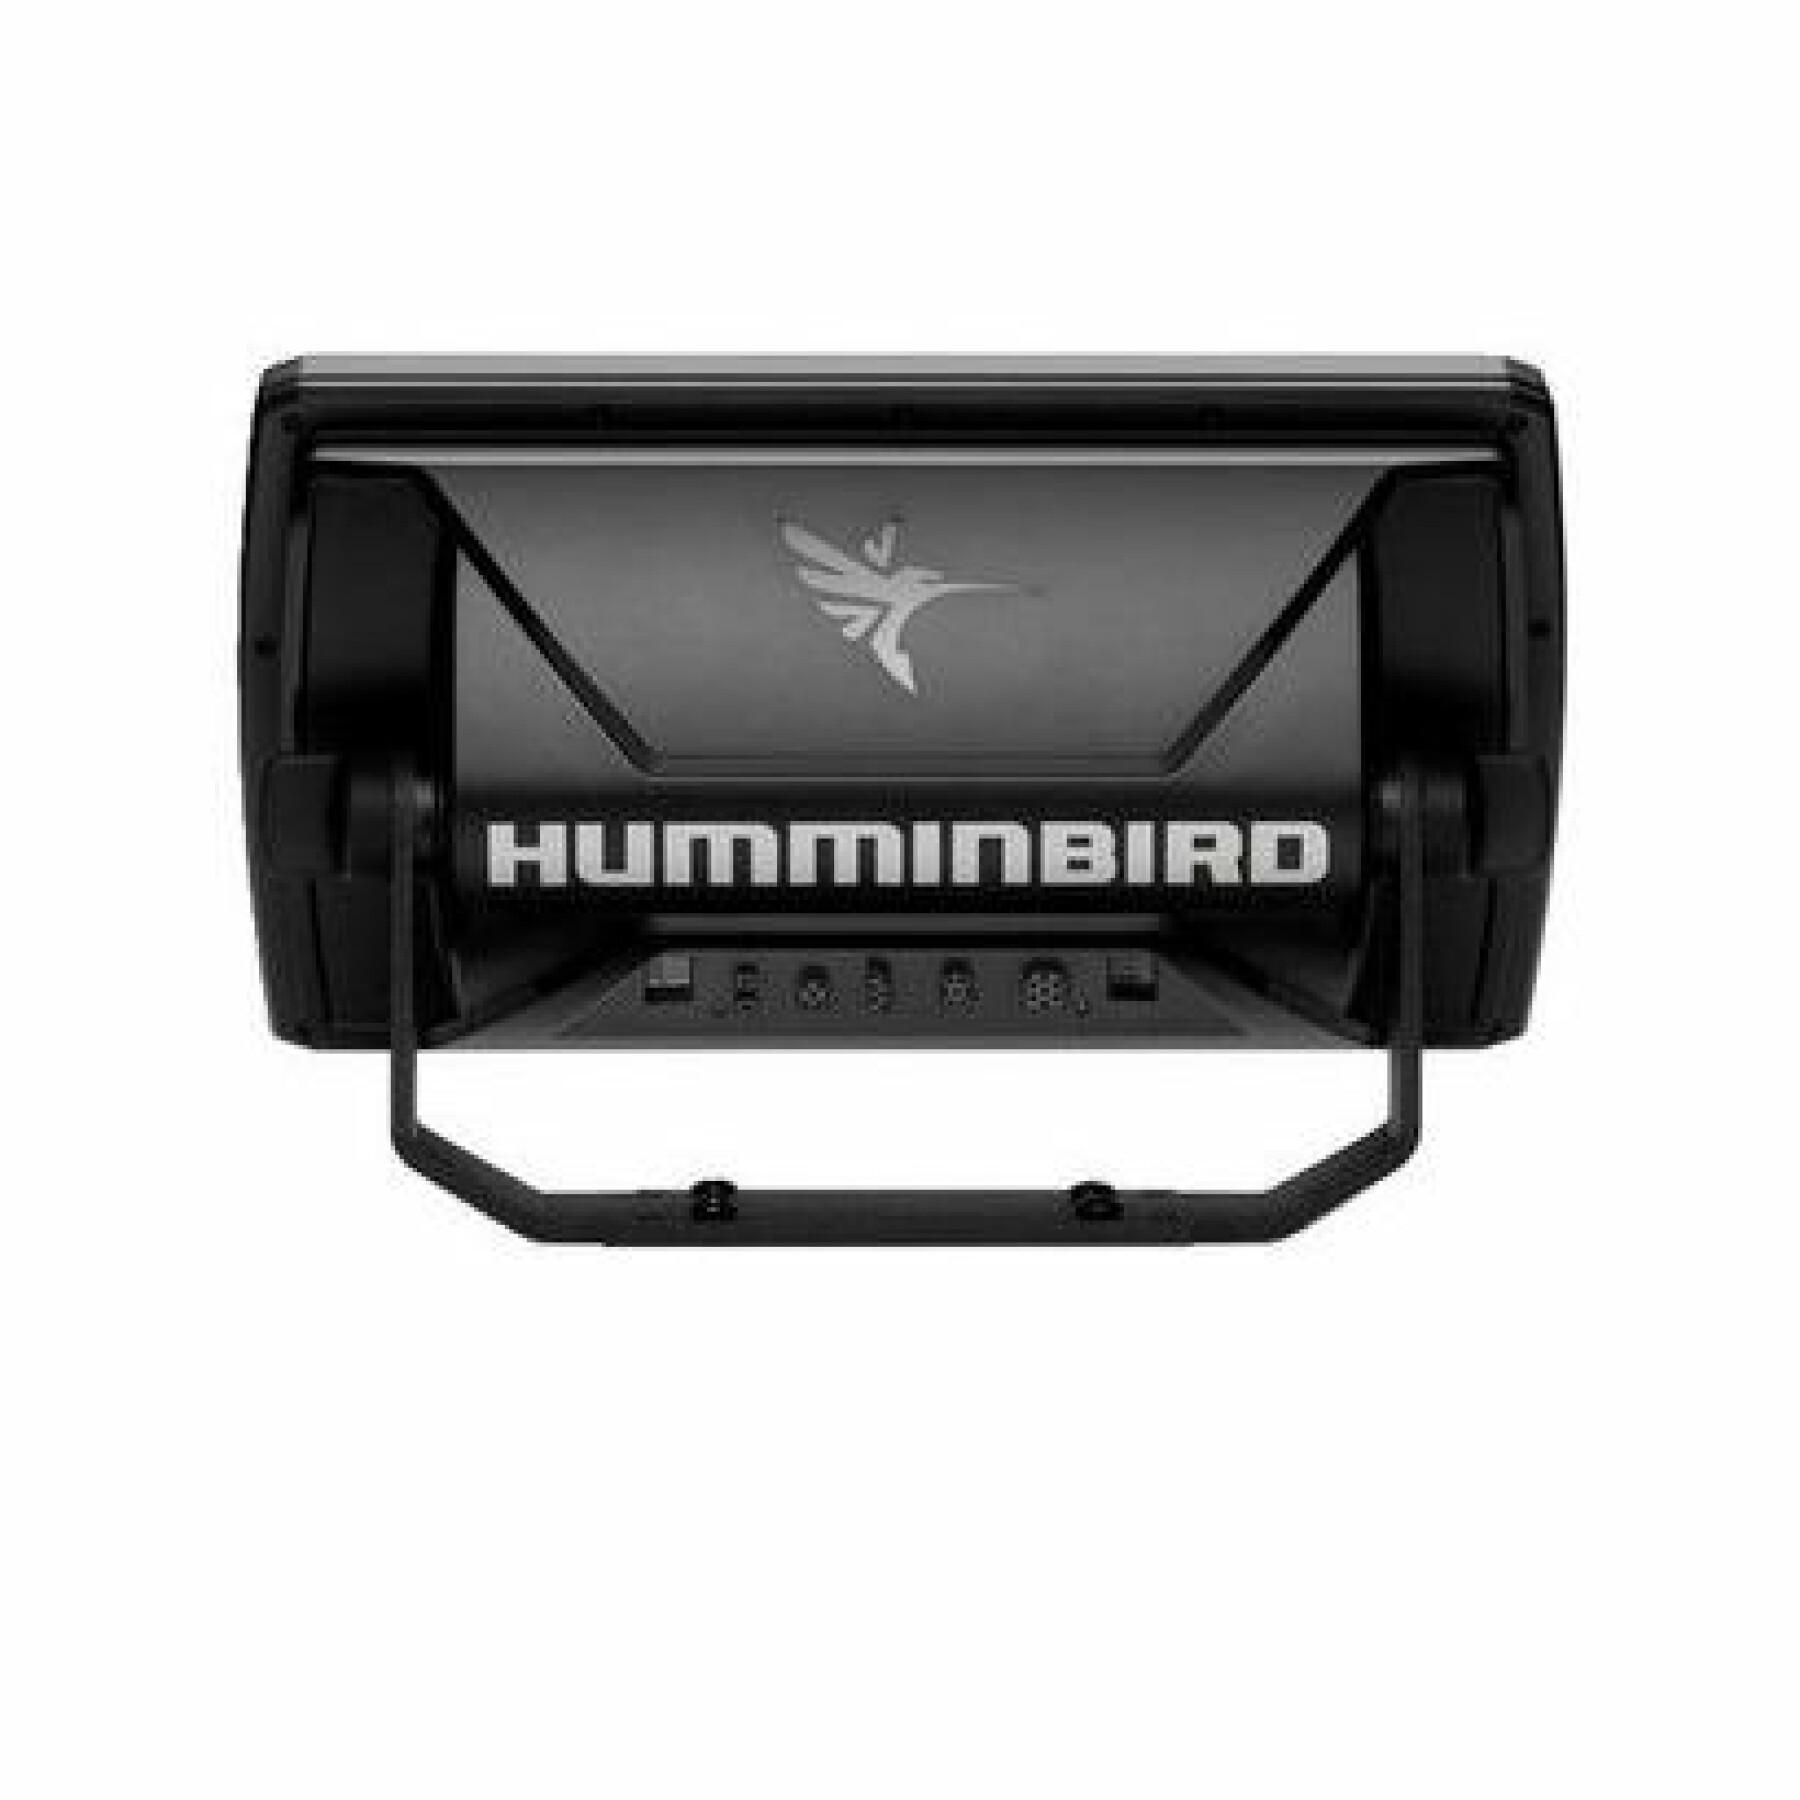 Gps i echosonda Humminbird Helix 9G4N wersja XD (411360-1)